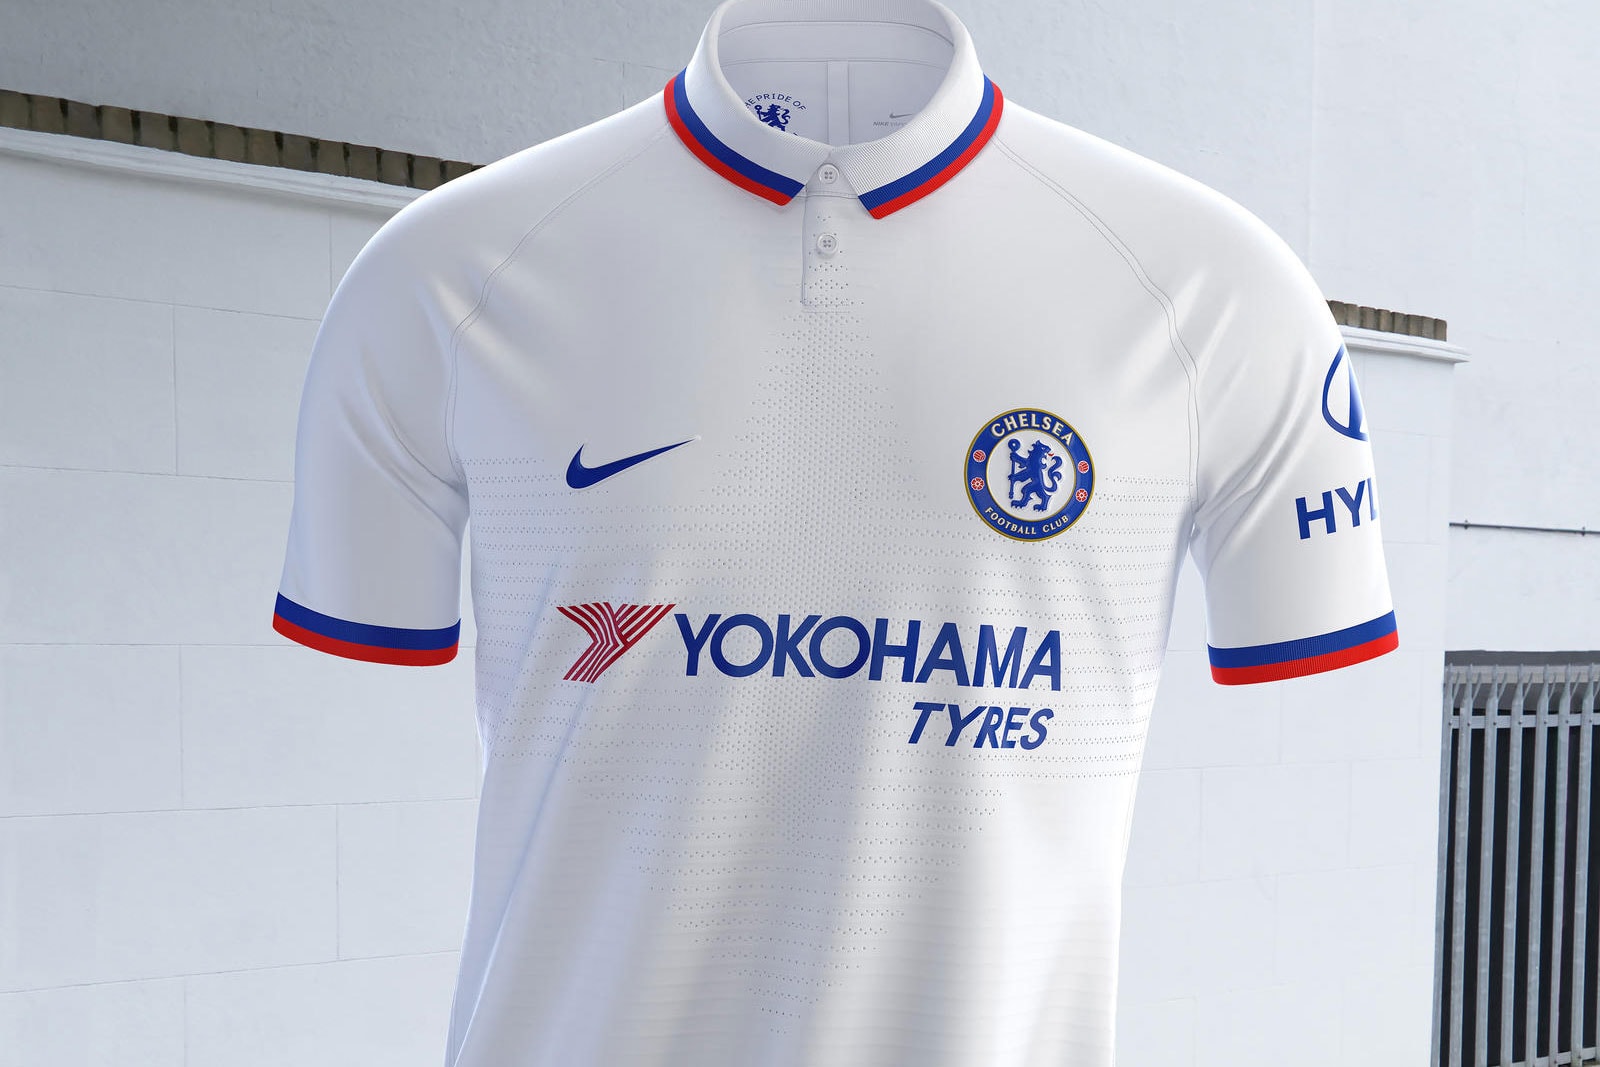 Chelsea 2019/20 Away Kits nike white mod 1960s white polo jersey collar top red blue Stamford Bridge frank lampard